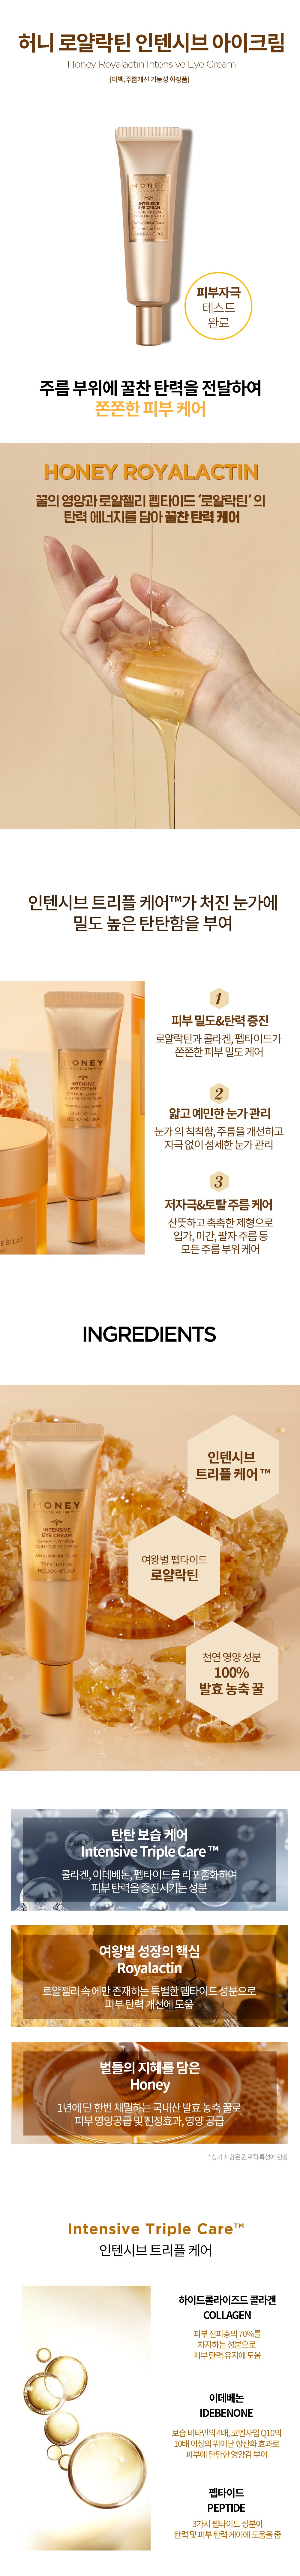 Holika Holika Honey Royalactin Intensive Eye Cream korean cosmetic skincare product online shop malaysia China hong kong2